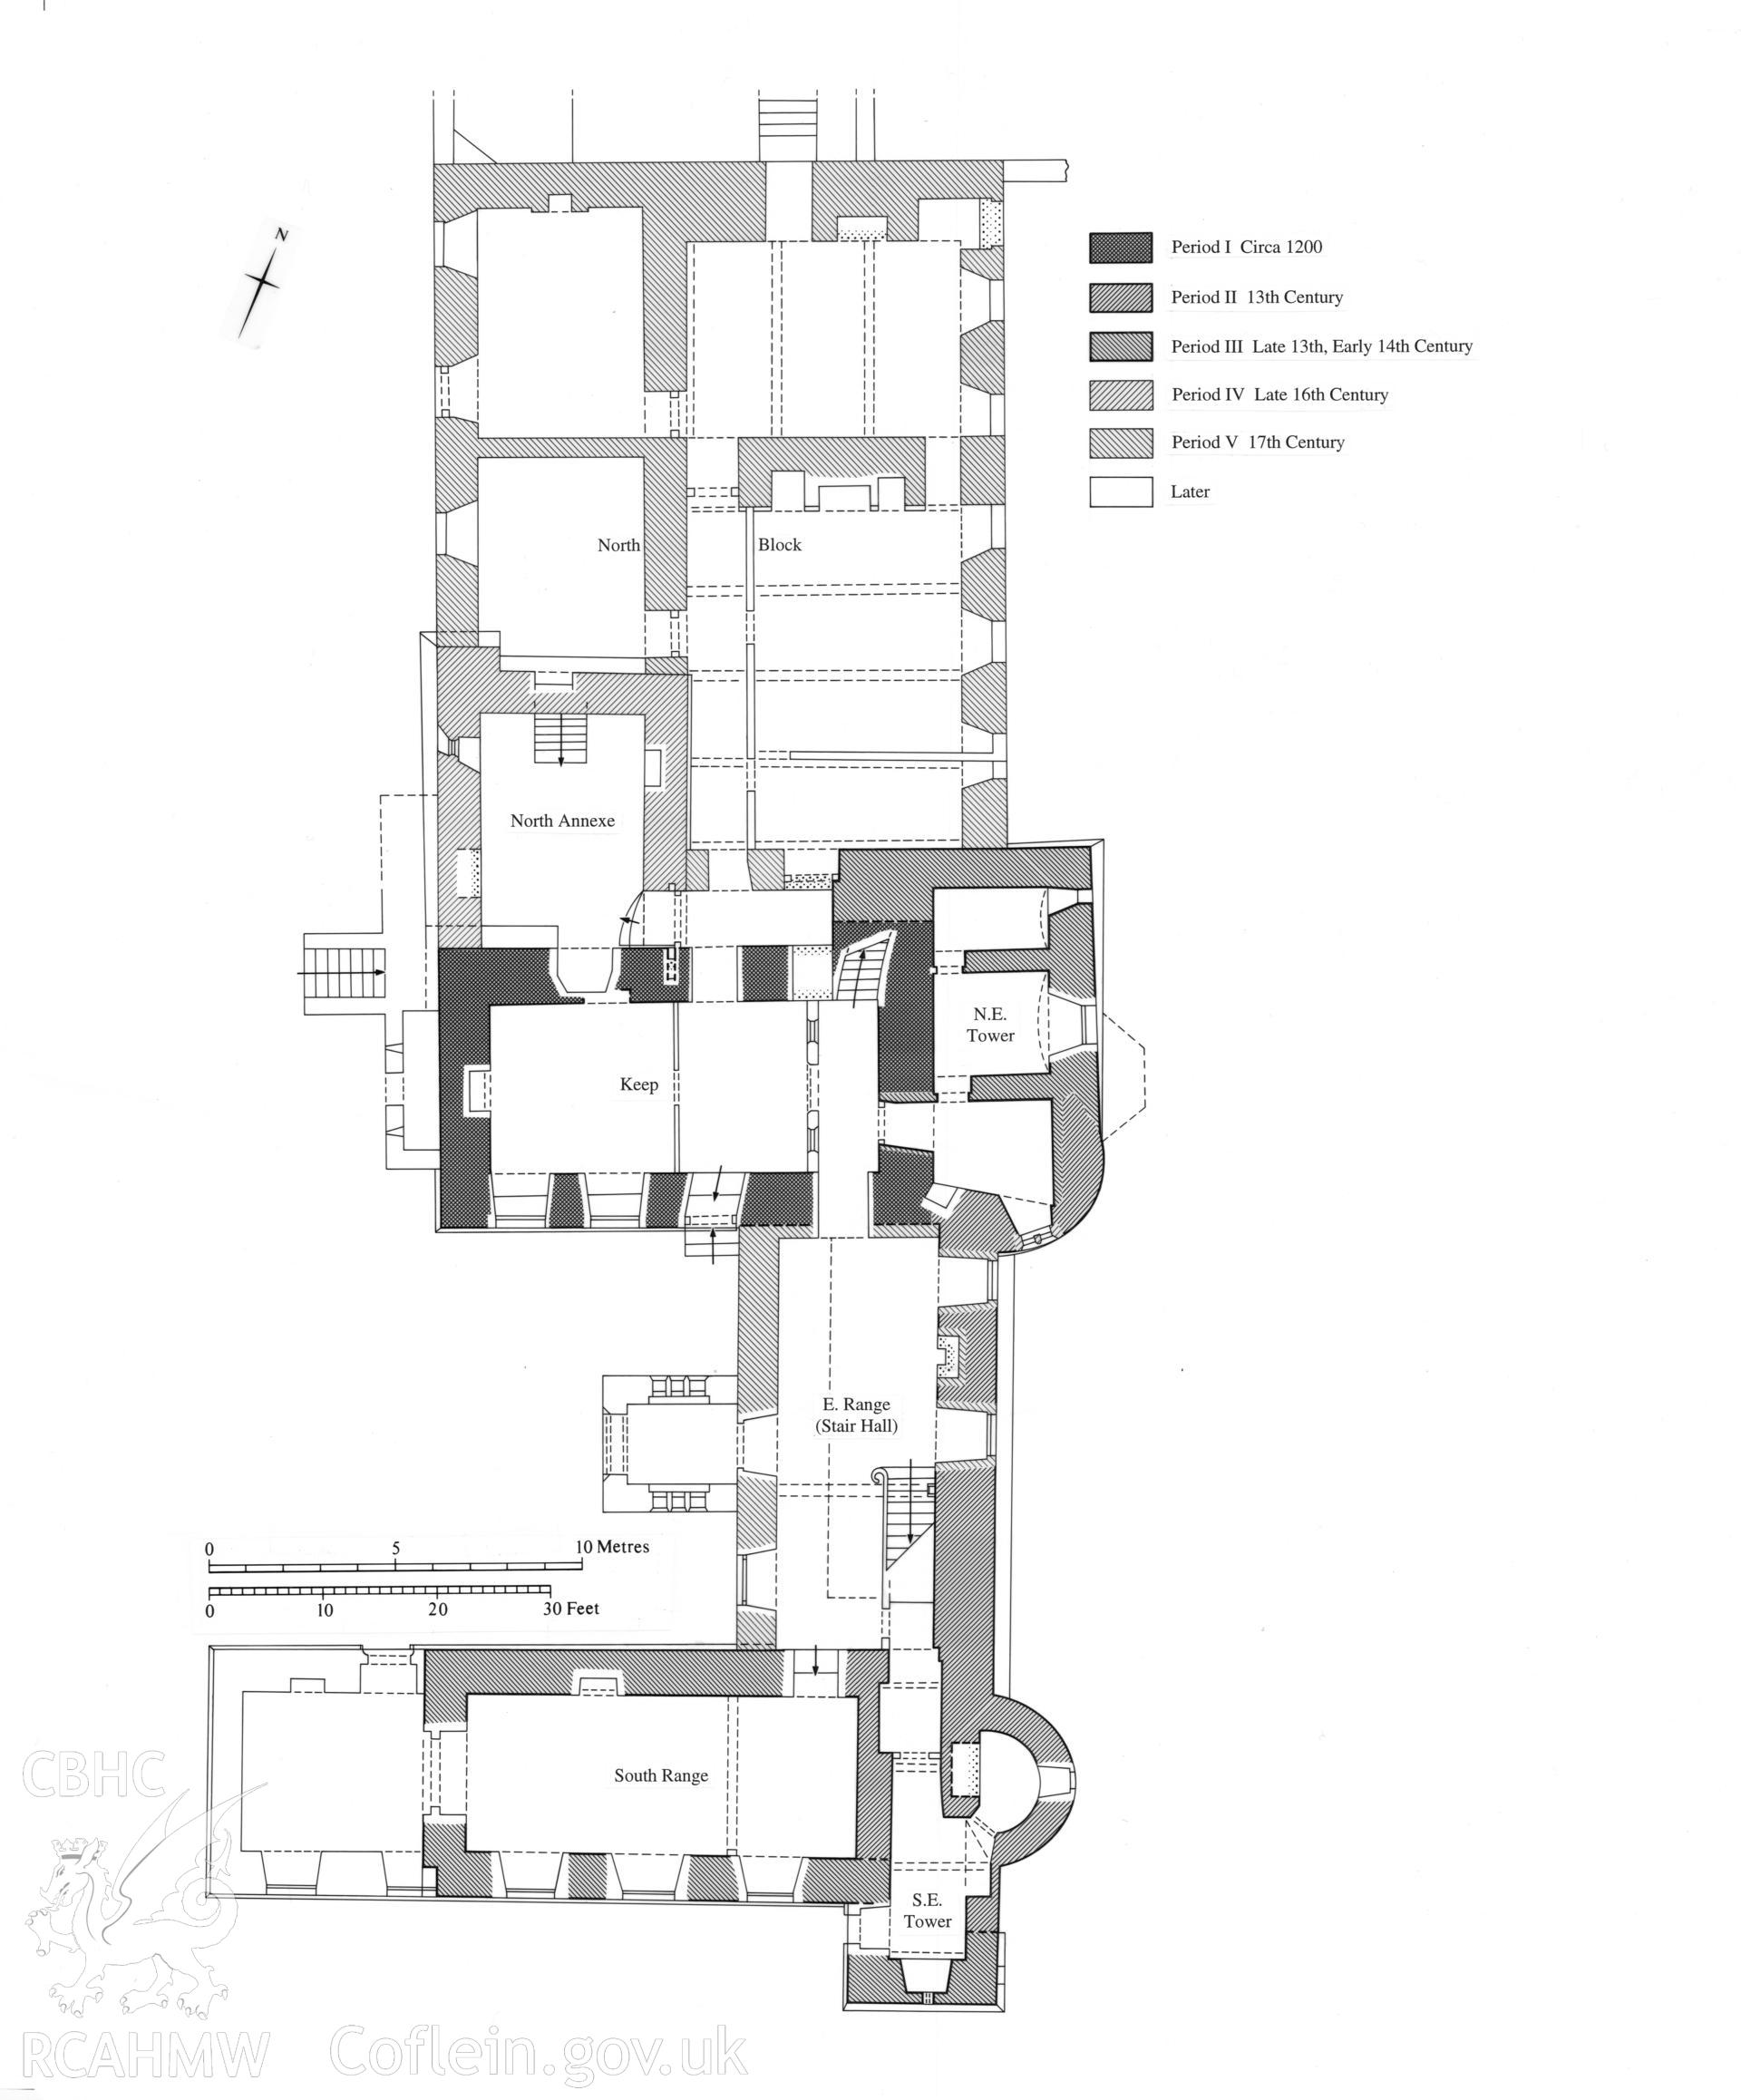 Digital copy of a measured plan of ground floor of Fonmon Castle, Rhoose, Later Castles, fig 79.